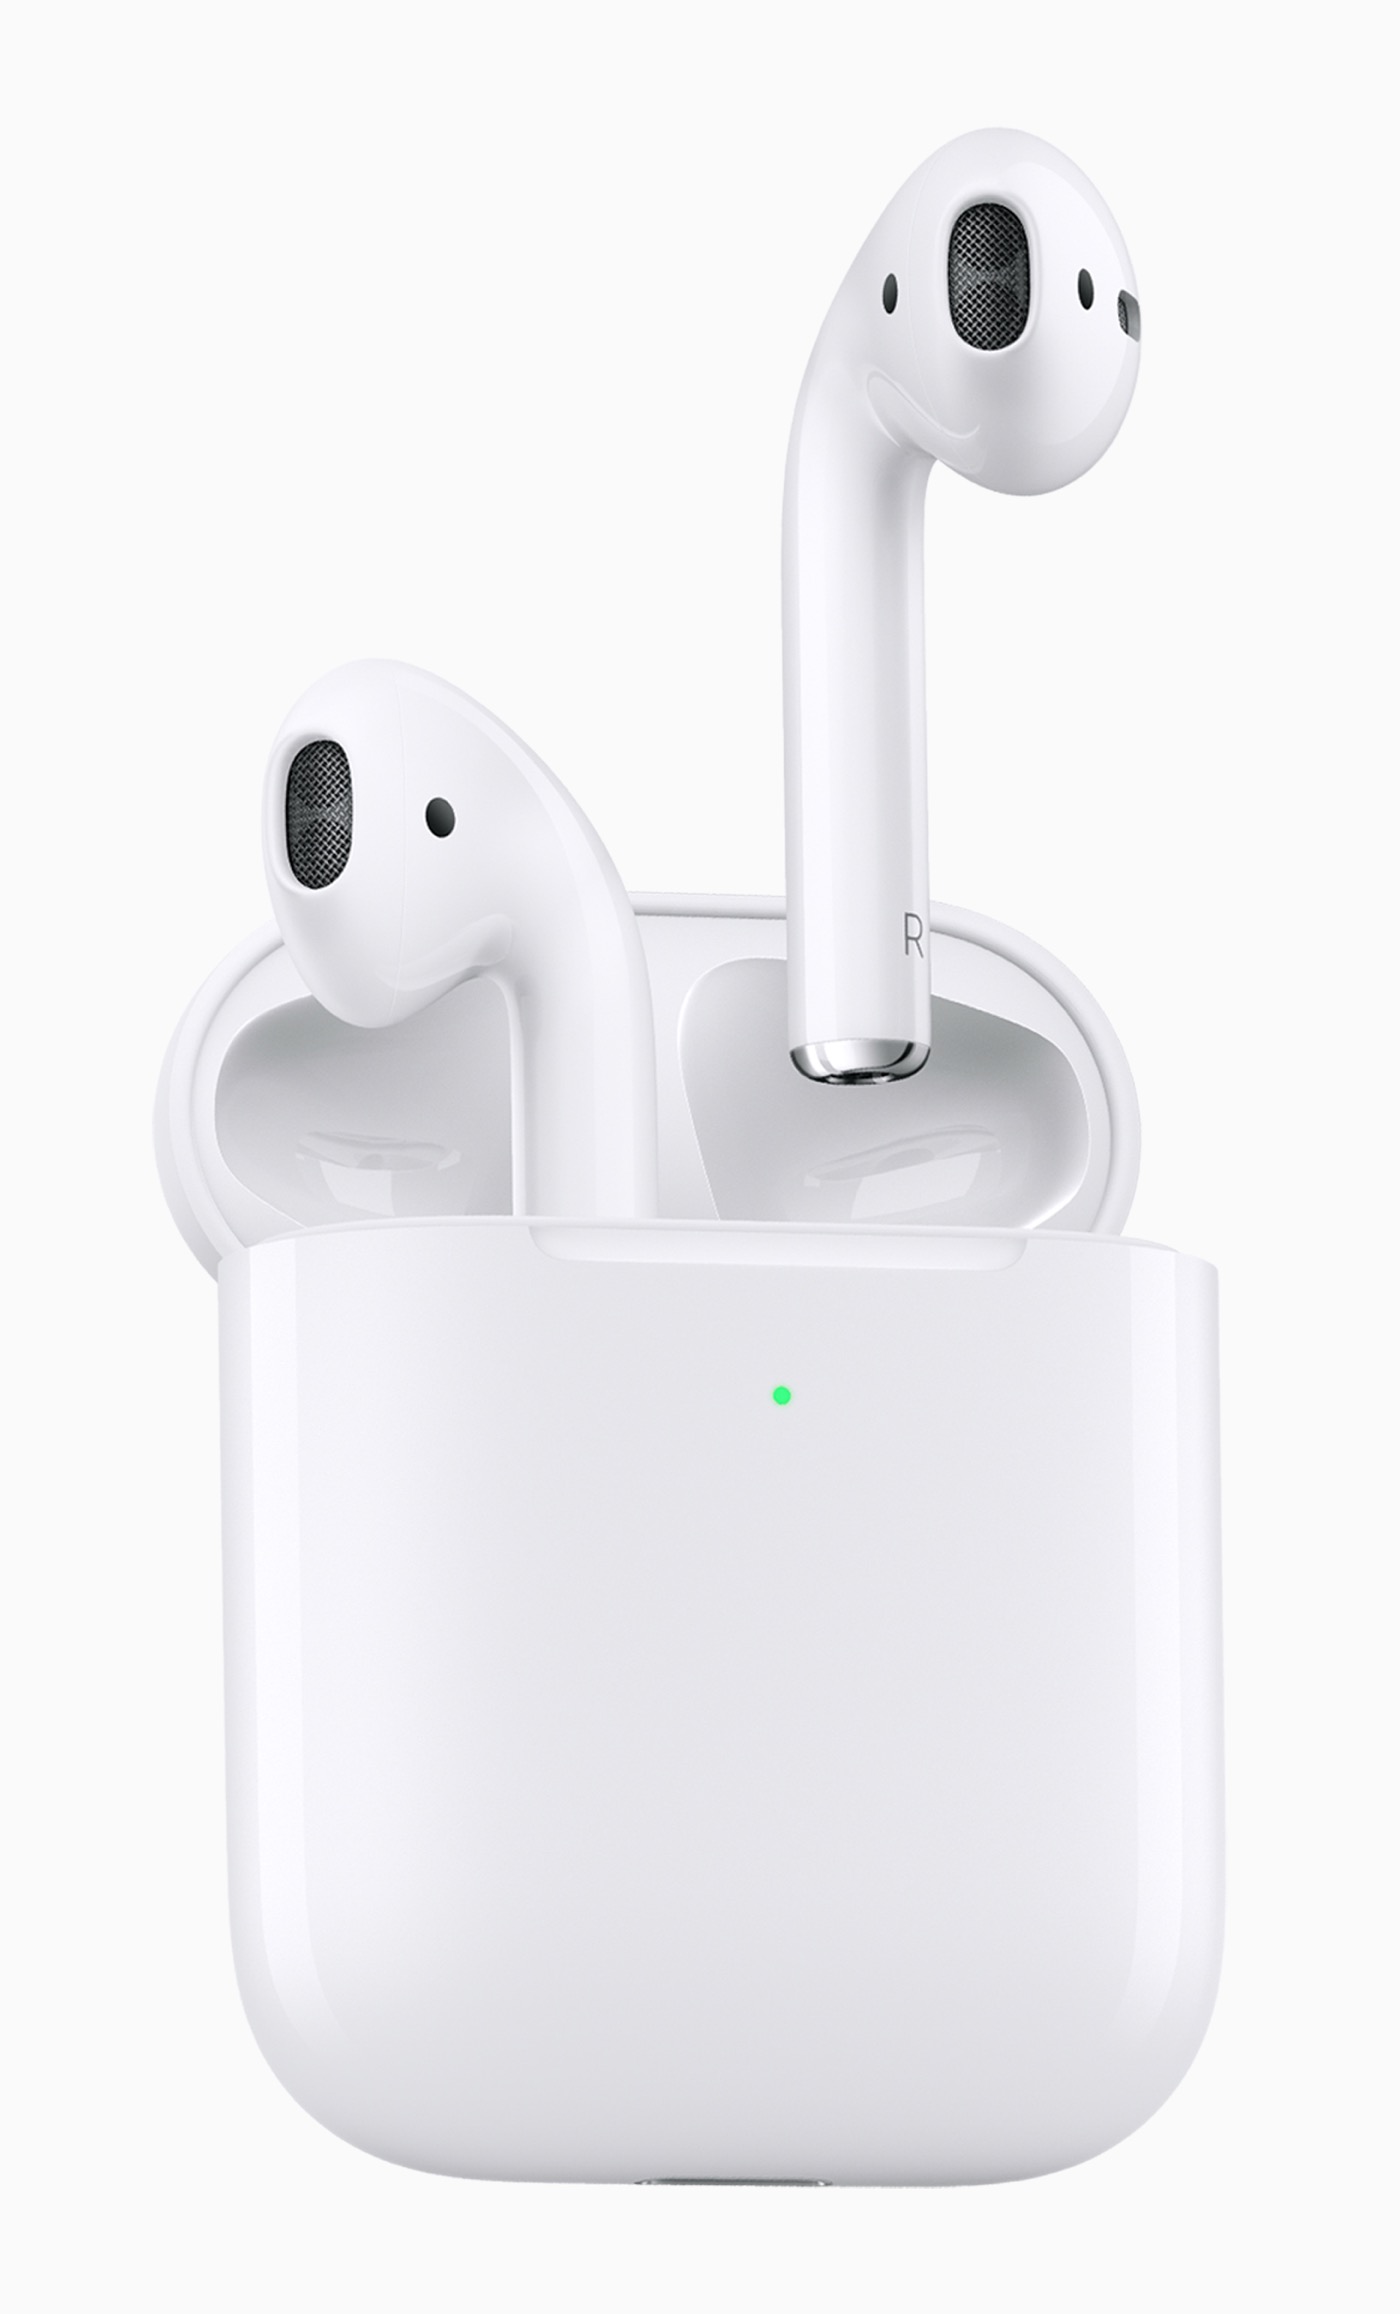 th_Apple-AirPods-worlds-most-popular-wireless-headphones_03202019.jpg